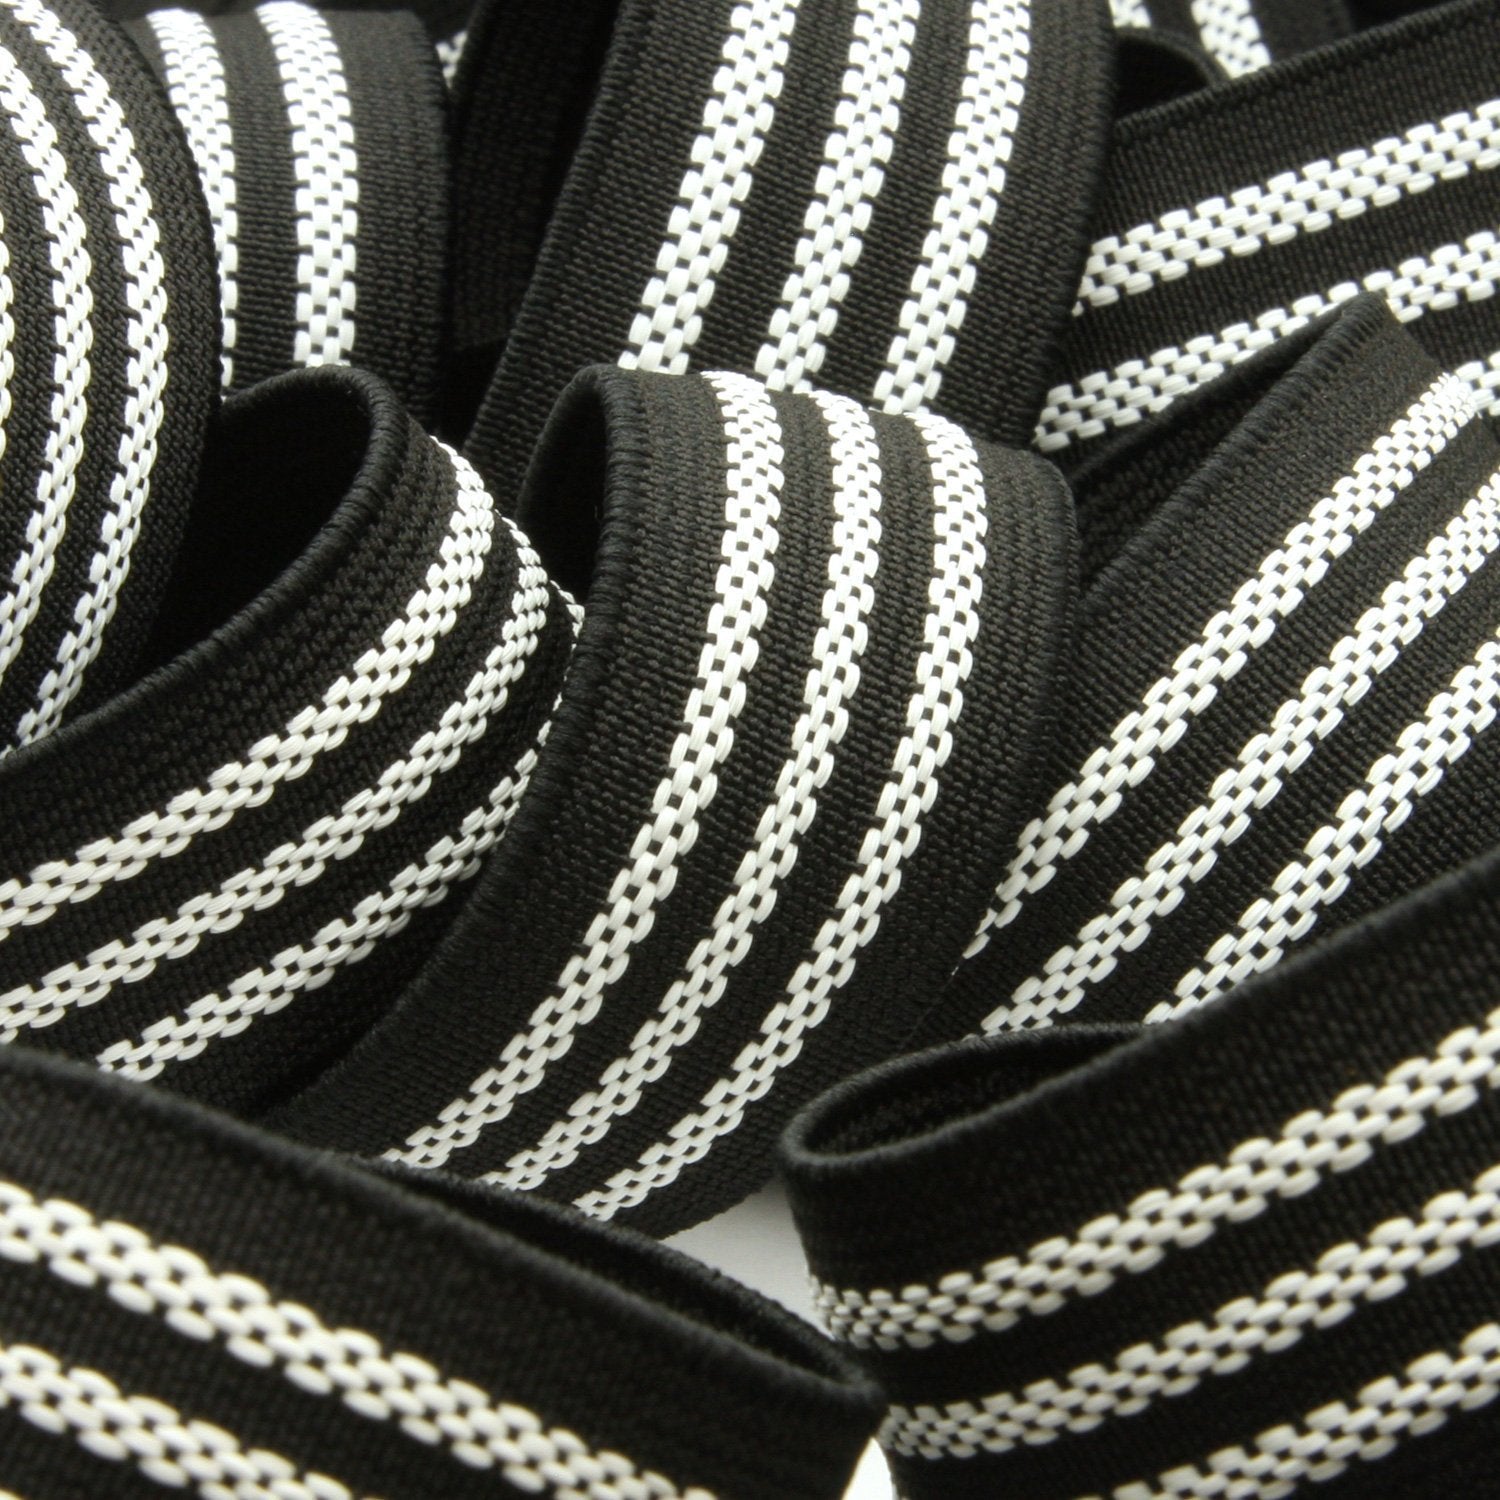 FUJIYAMA RIBBON Non-Slip Band 30mm Black & White 9.14 Meters Roll